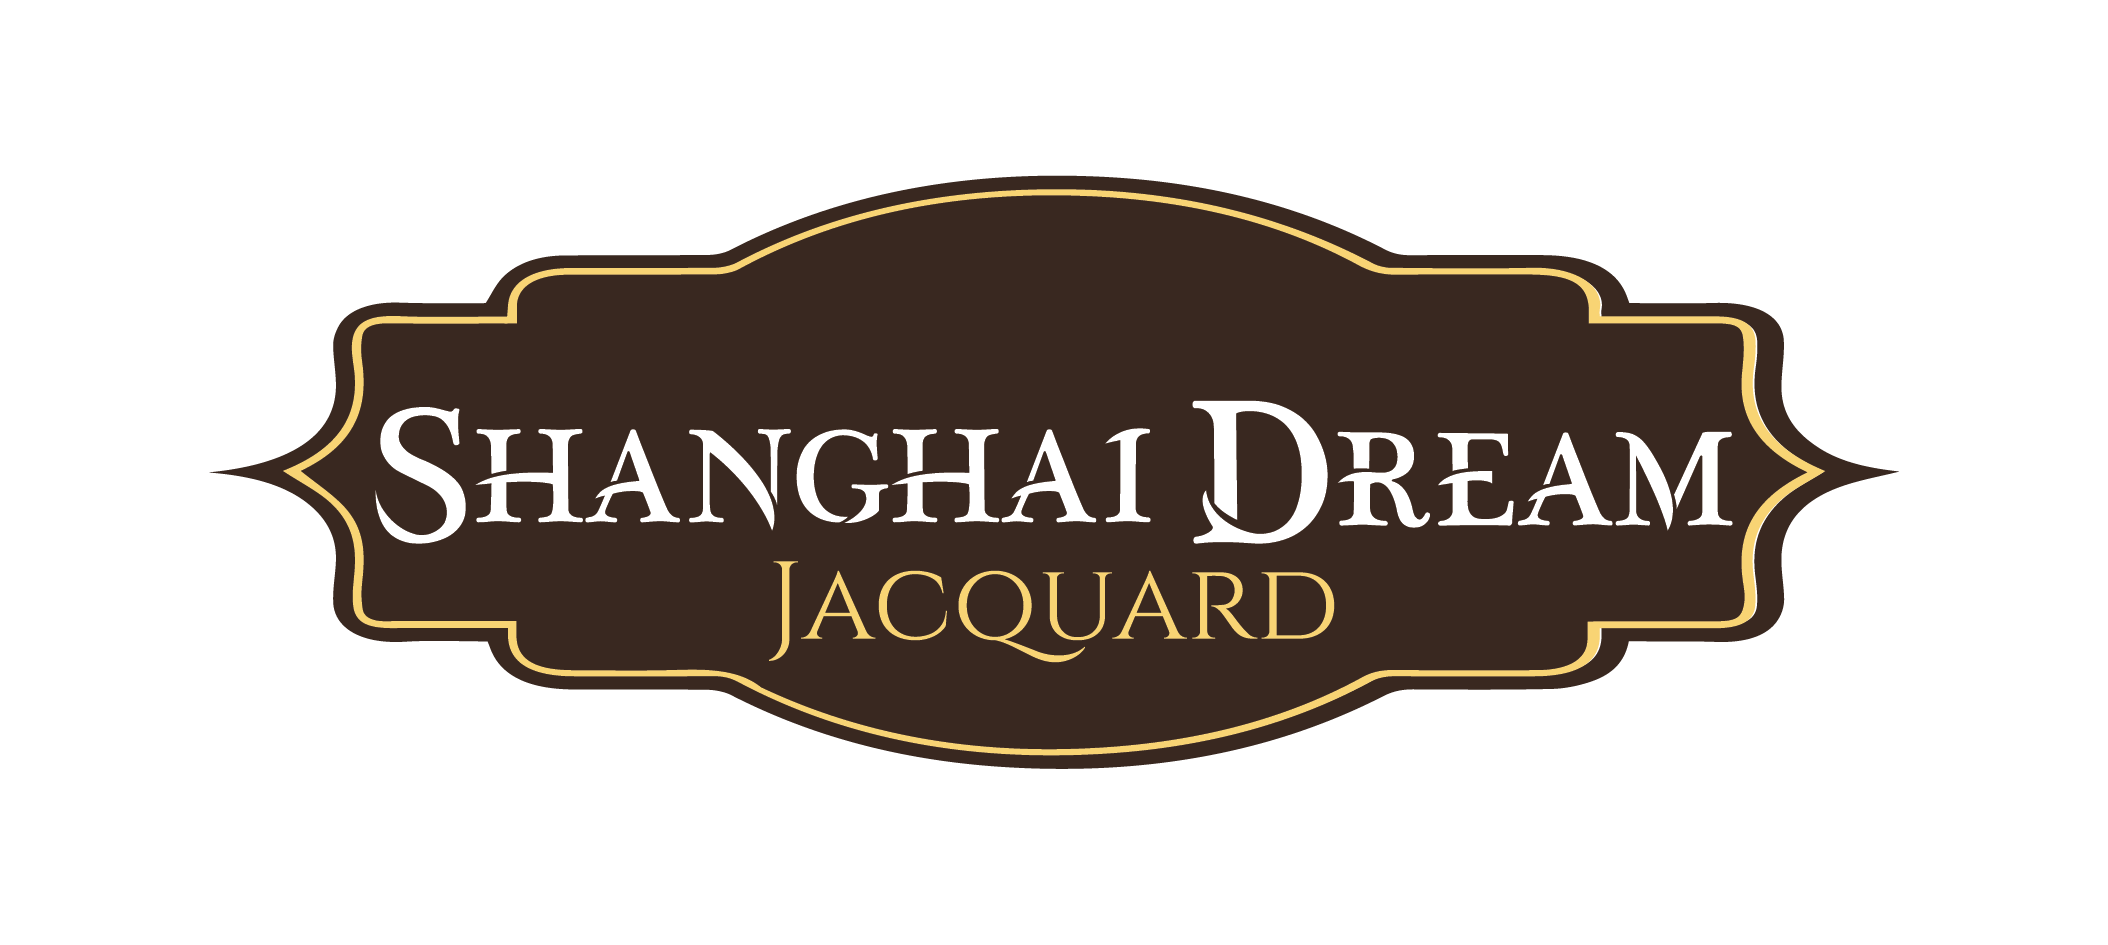 Shanghai Dream Jacquard Flannel 4 Pcs Bed Cover Set HBK